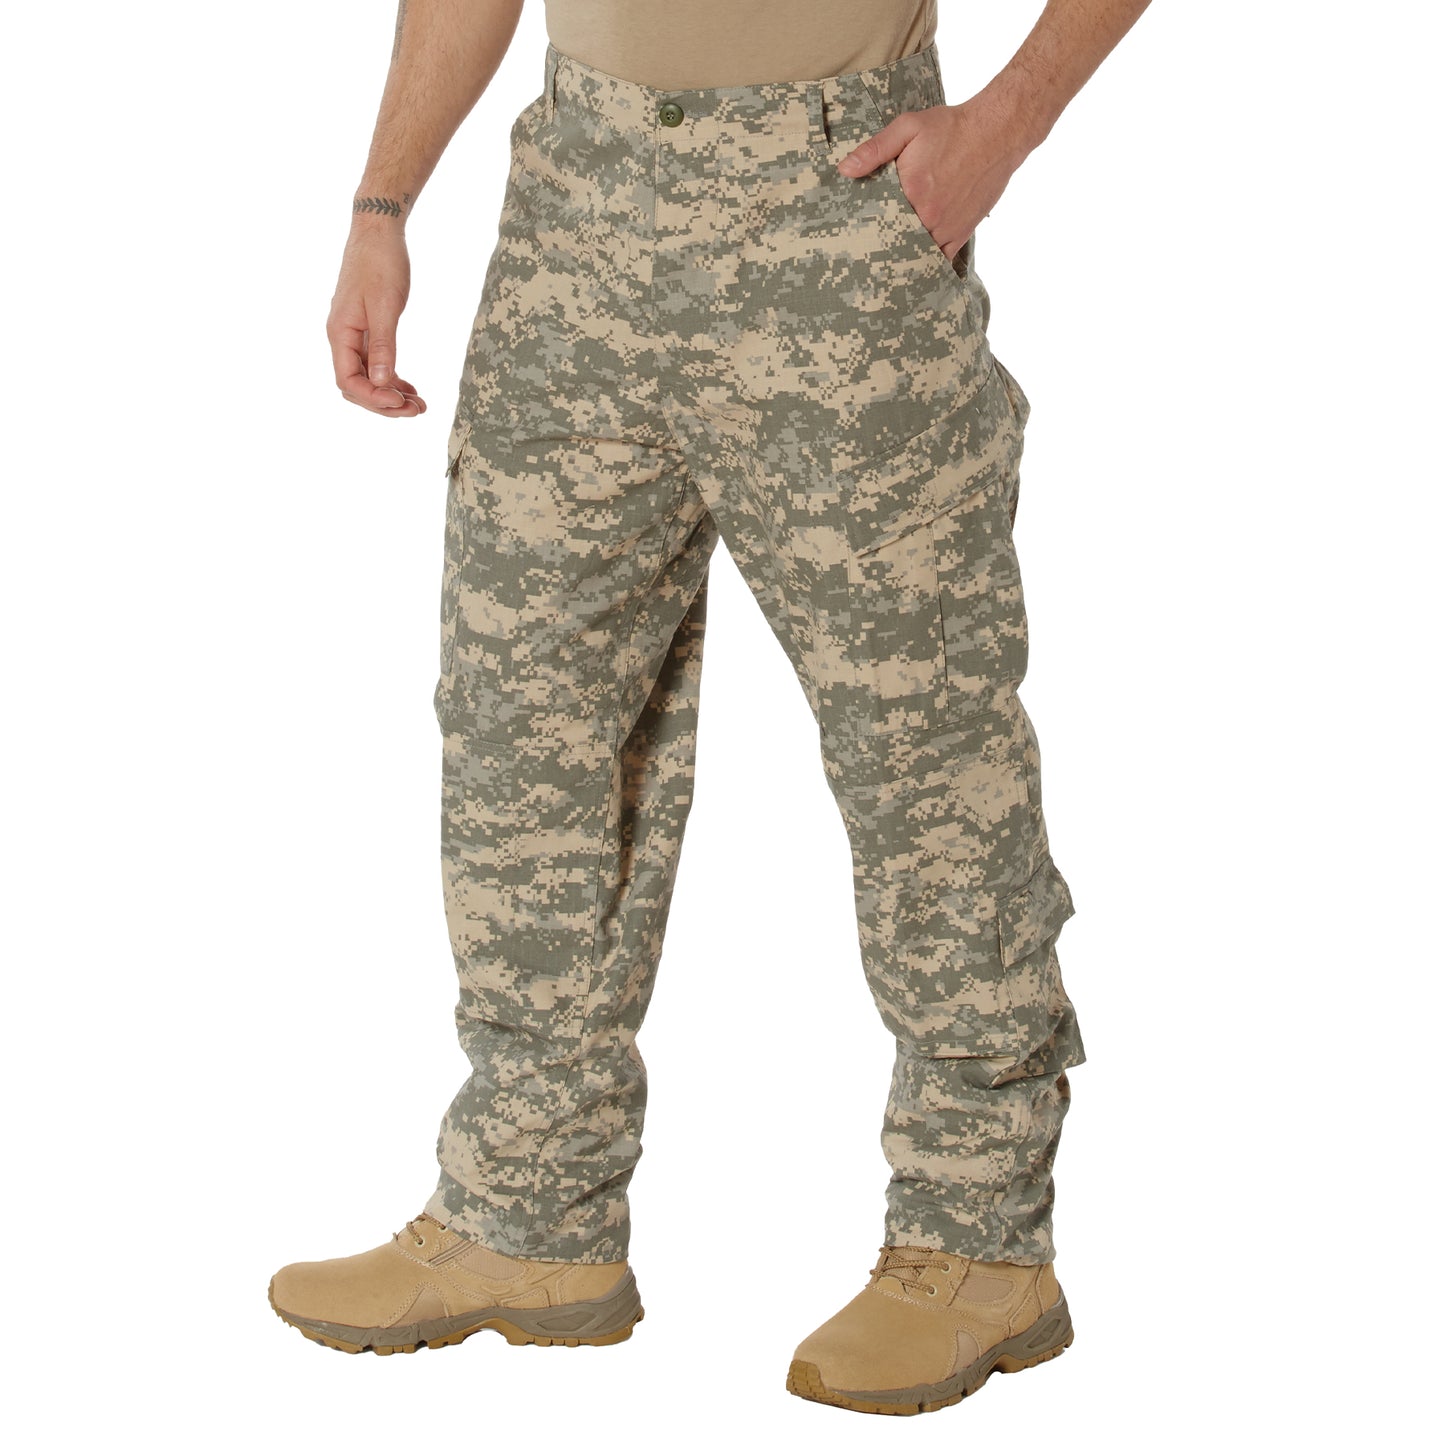 Rothco Camo Army Combat Uniform Pants - ACU Digital Camo